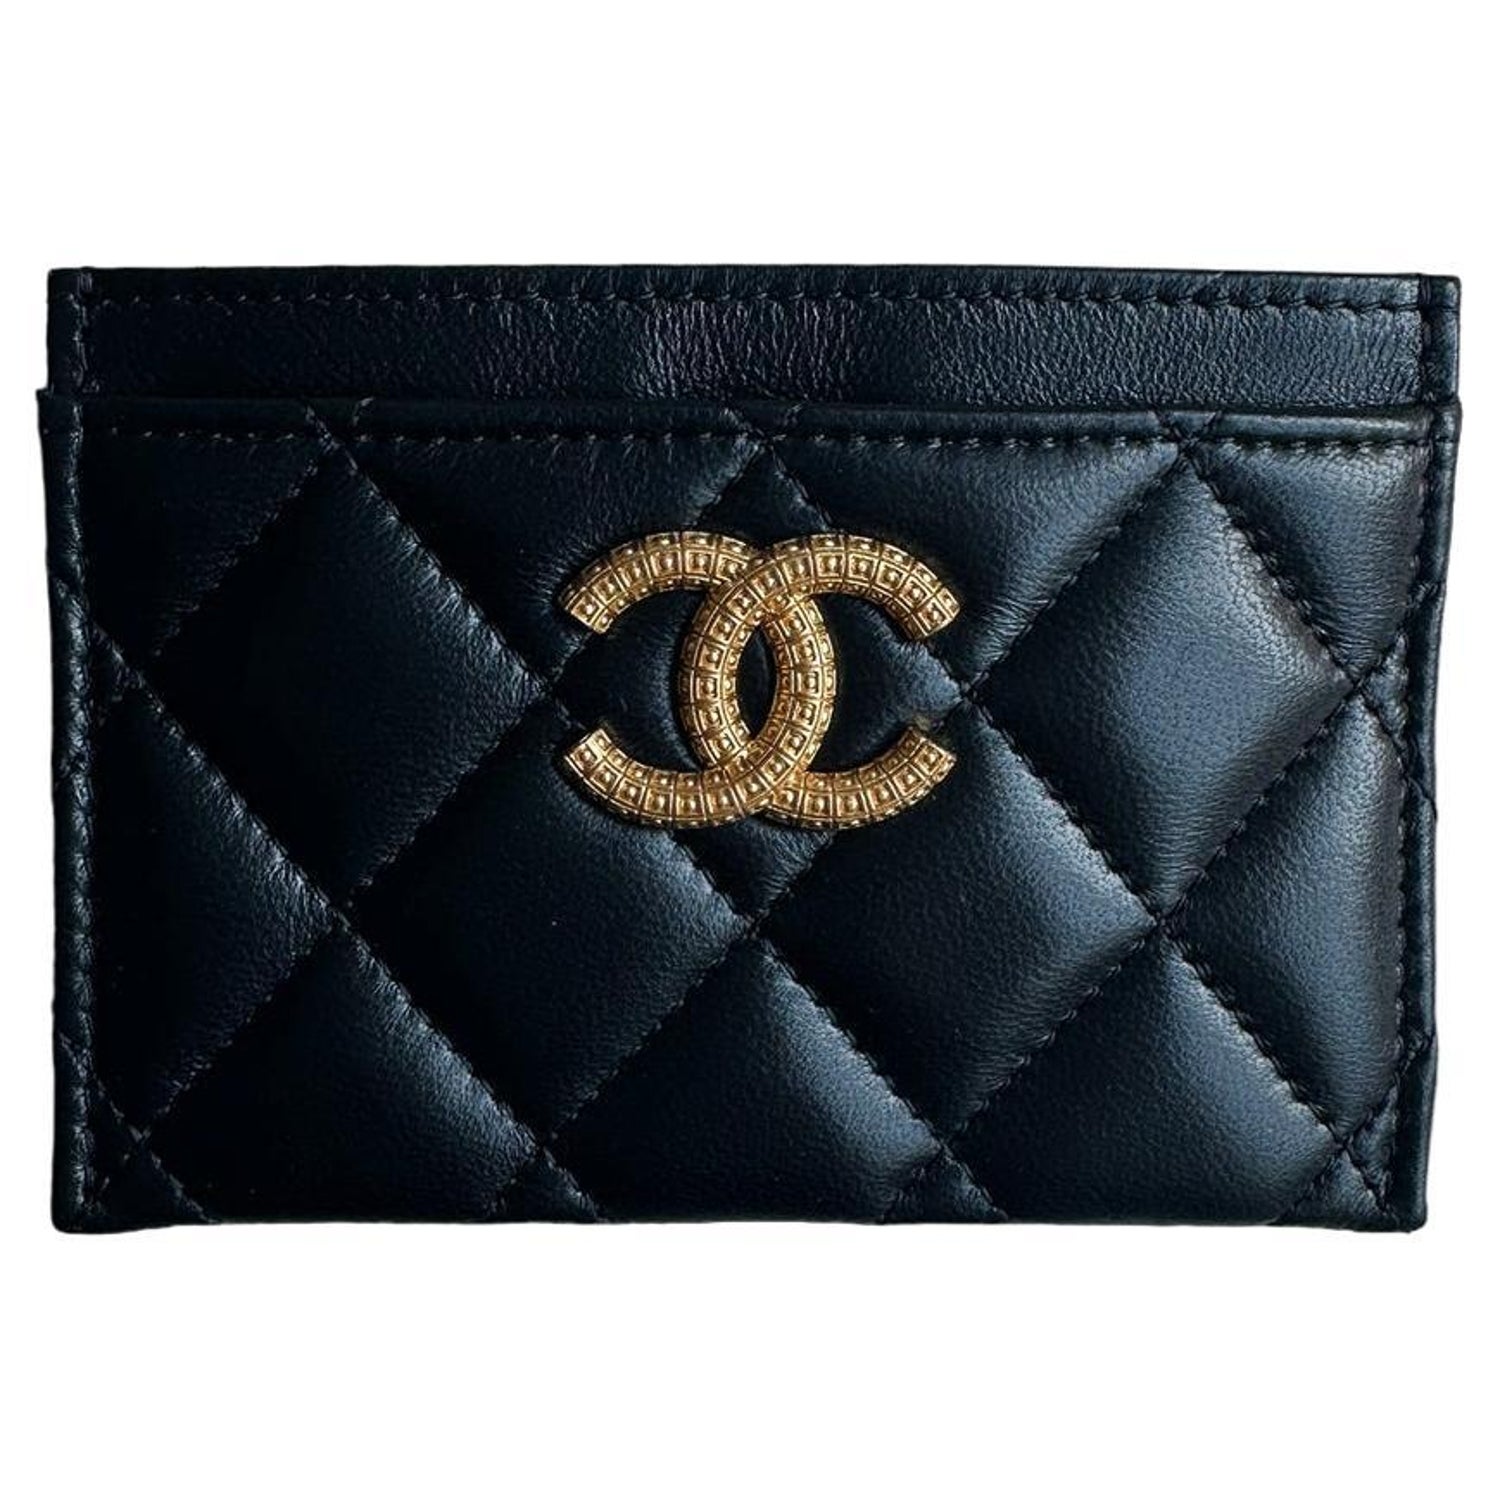 Chanel Purse Black Wallet - 189 For Sale on 1stDibs